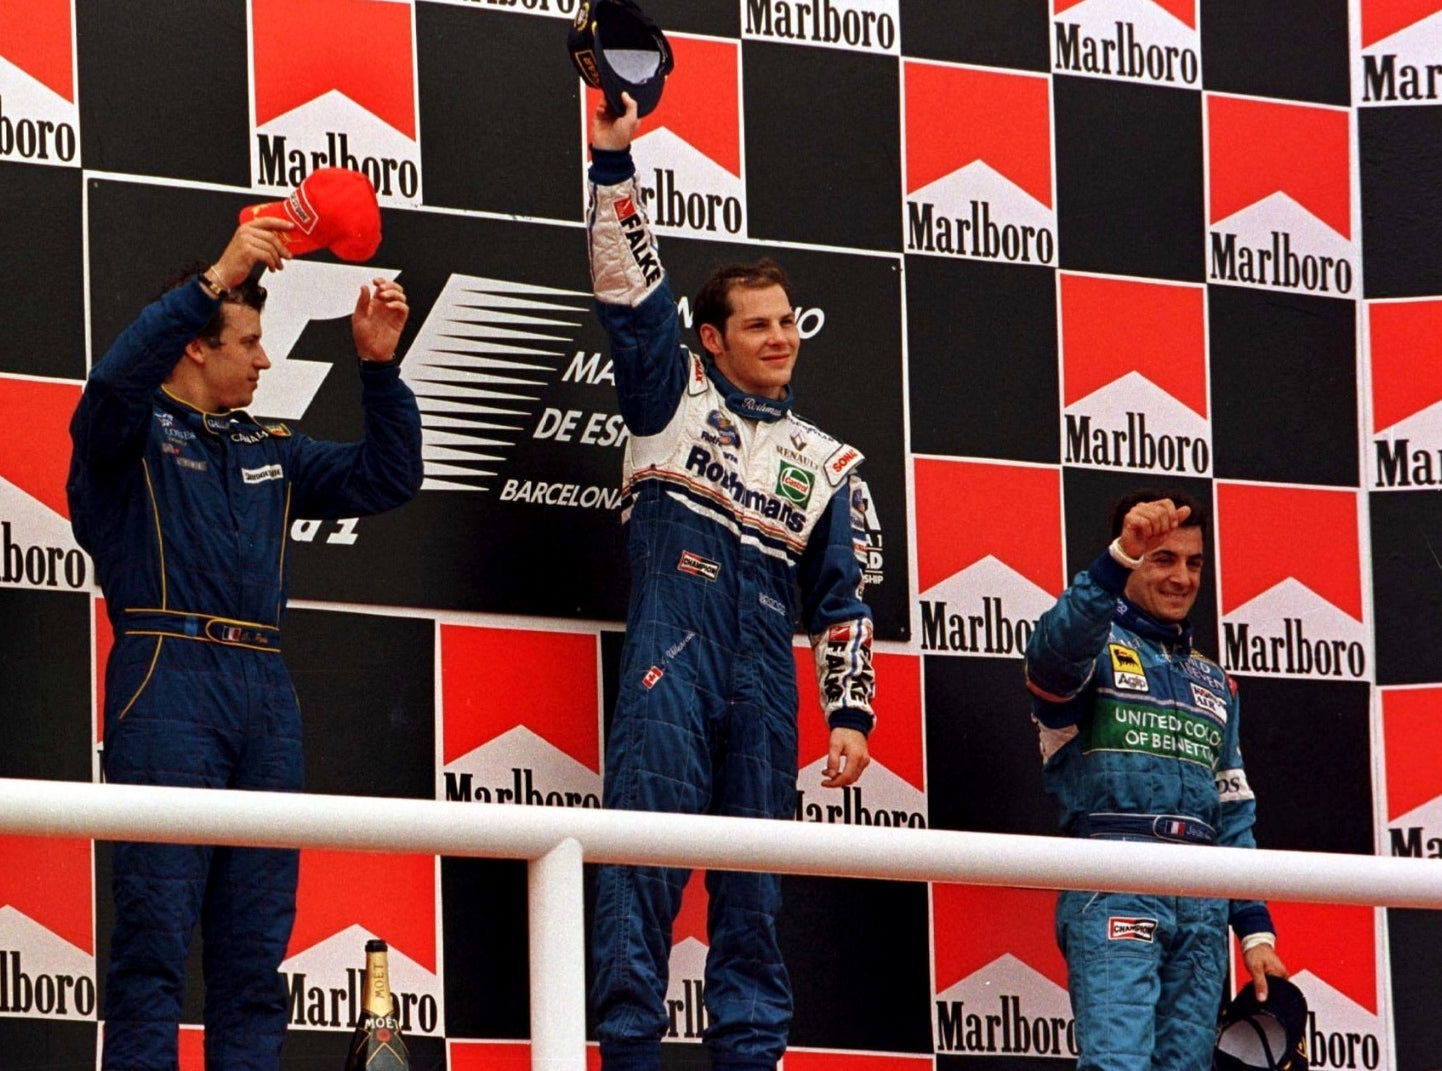 1997 Jacques Villeneuve Signed Spanish Grand Prix F1 Champagne Bottle